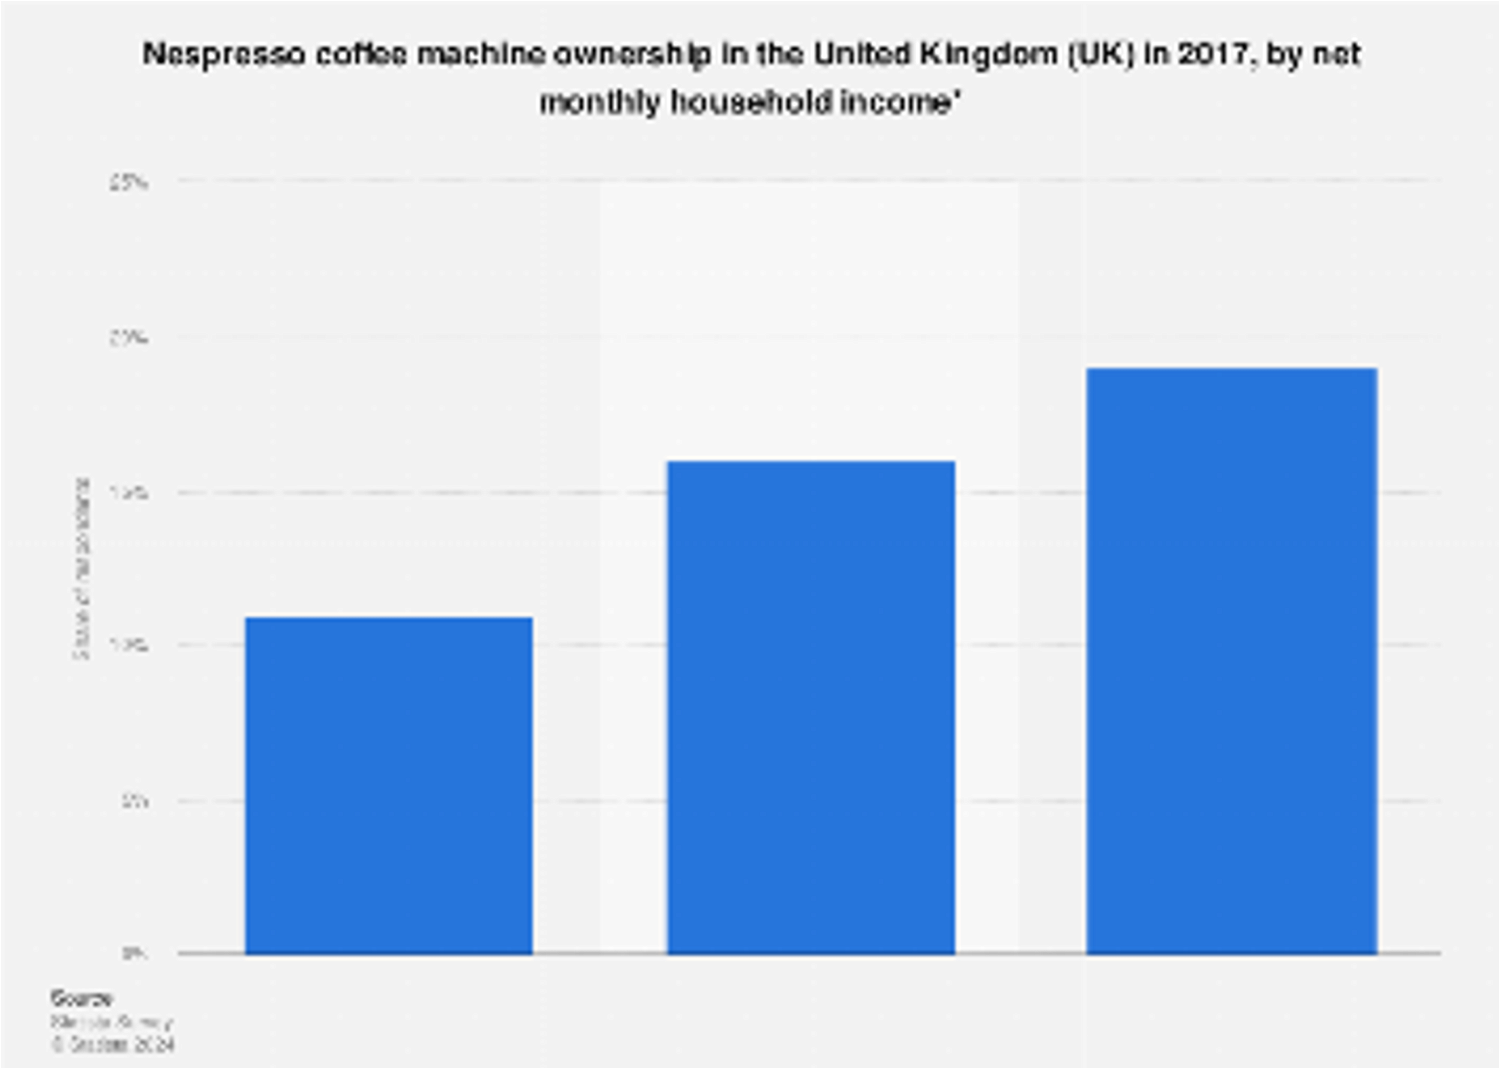 Nespresso machine ownership by income 2017 | Statista